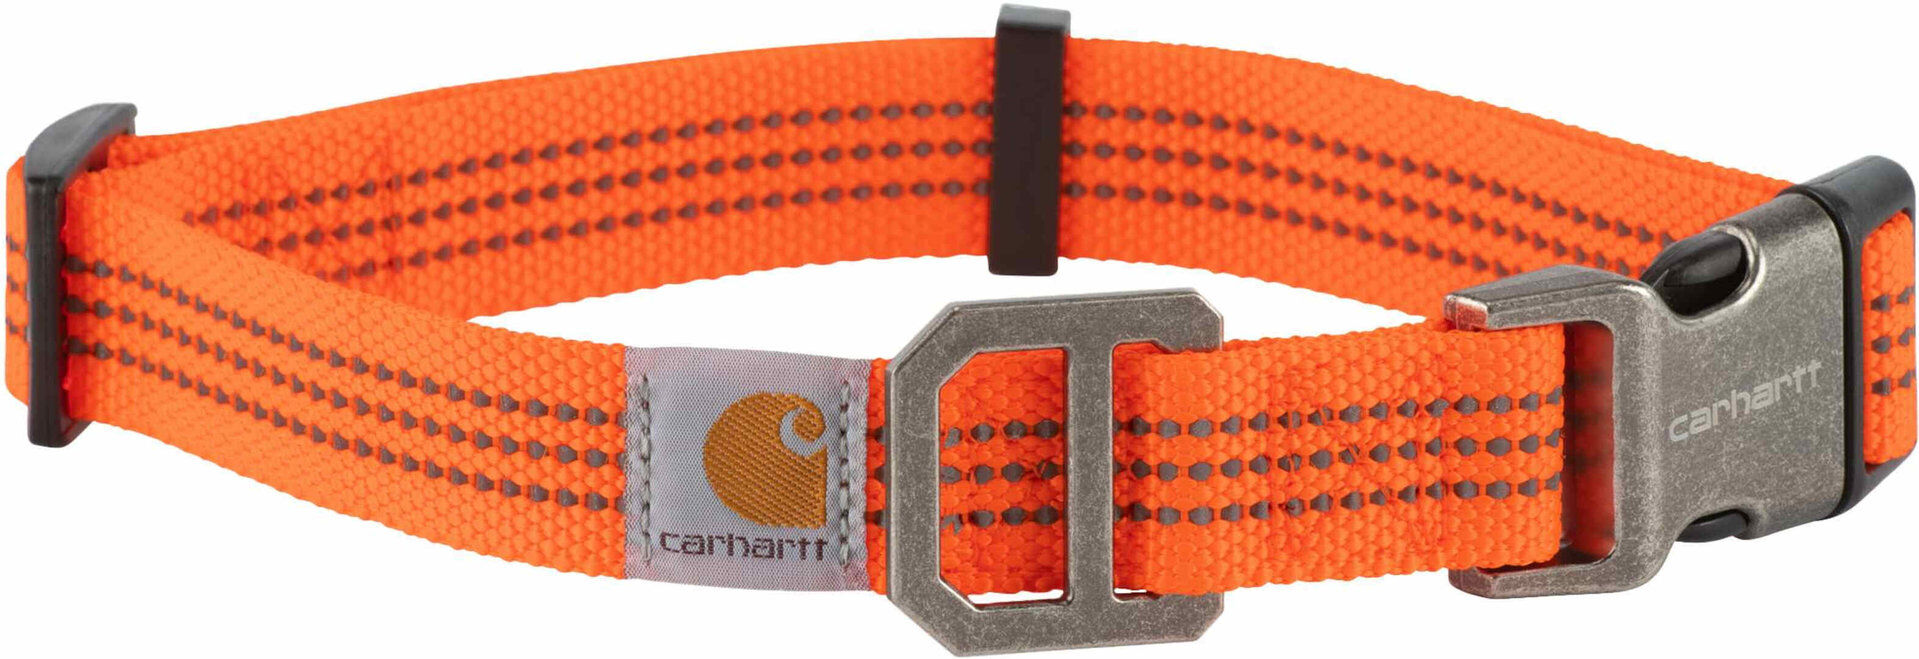 Carhartt Tradesman Dog Collar  - Orange